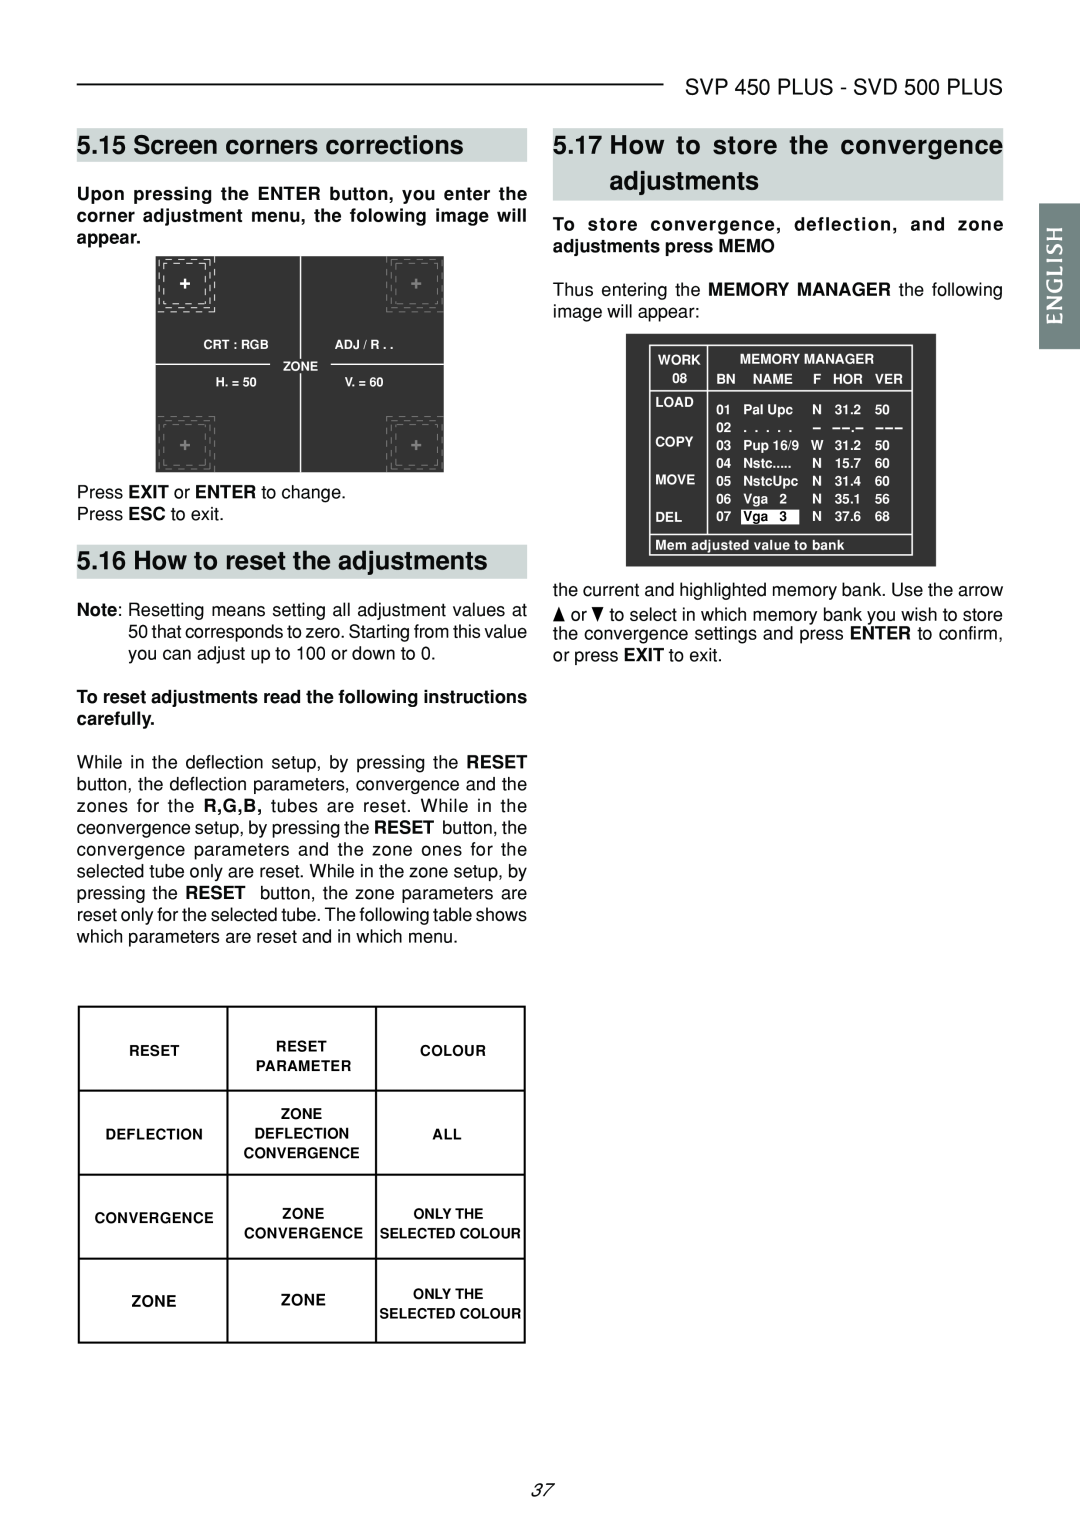 Sim2 Multimedia manual Screen corners corrections, How to reset the adjustments, SVP 450 PLUS - SVD 500 PLUS, English 